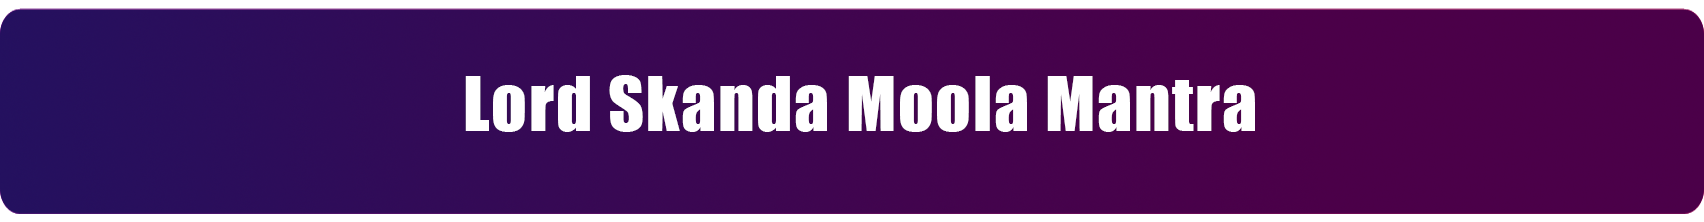 Moola Mantra